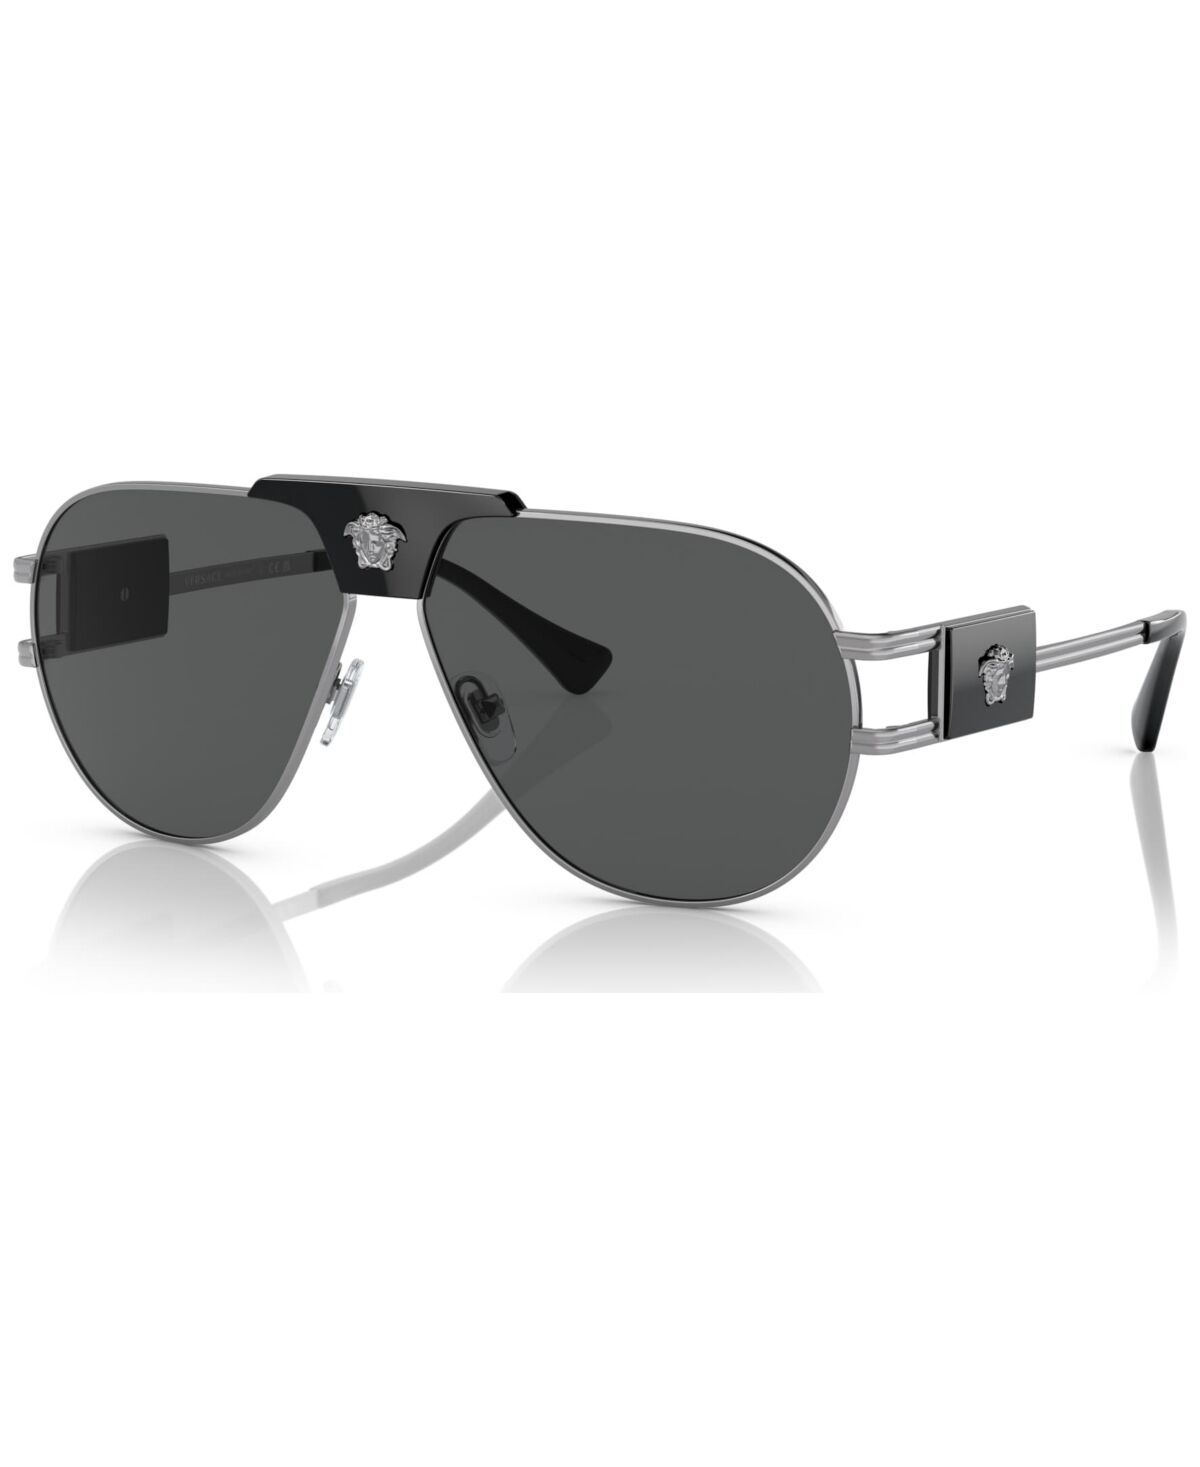 Versace Men's Sunglasses, VE2252 - Gunmetal